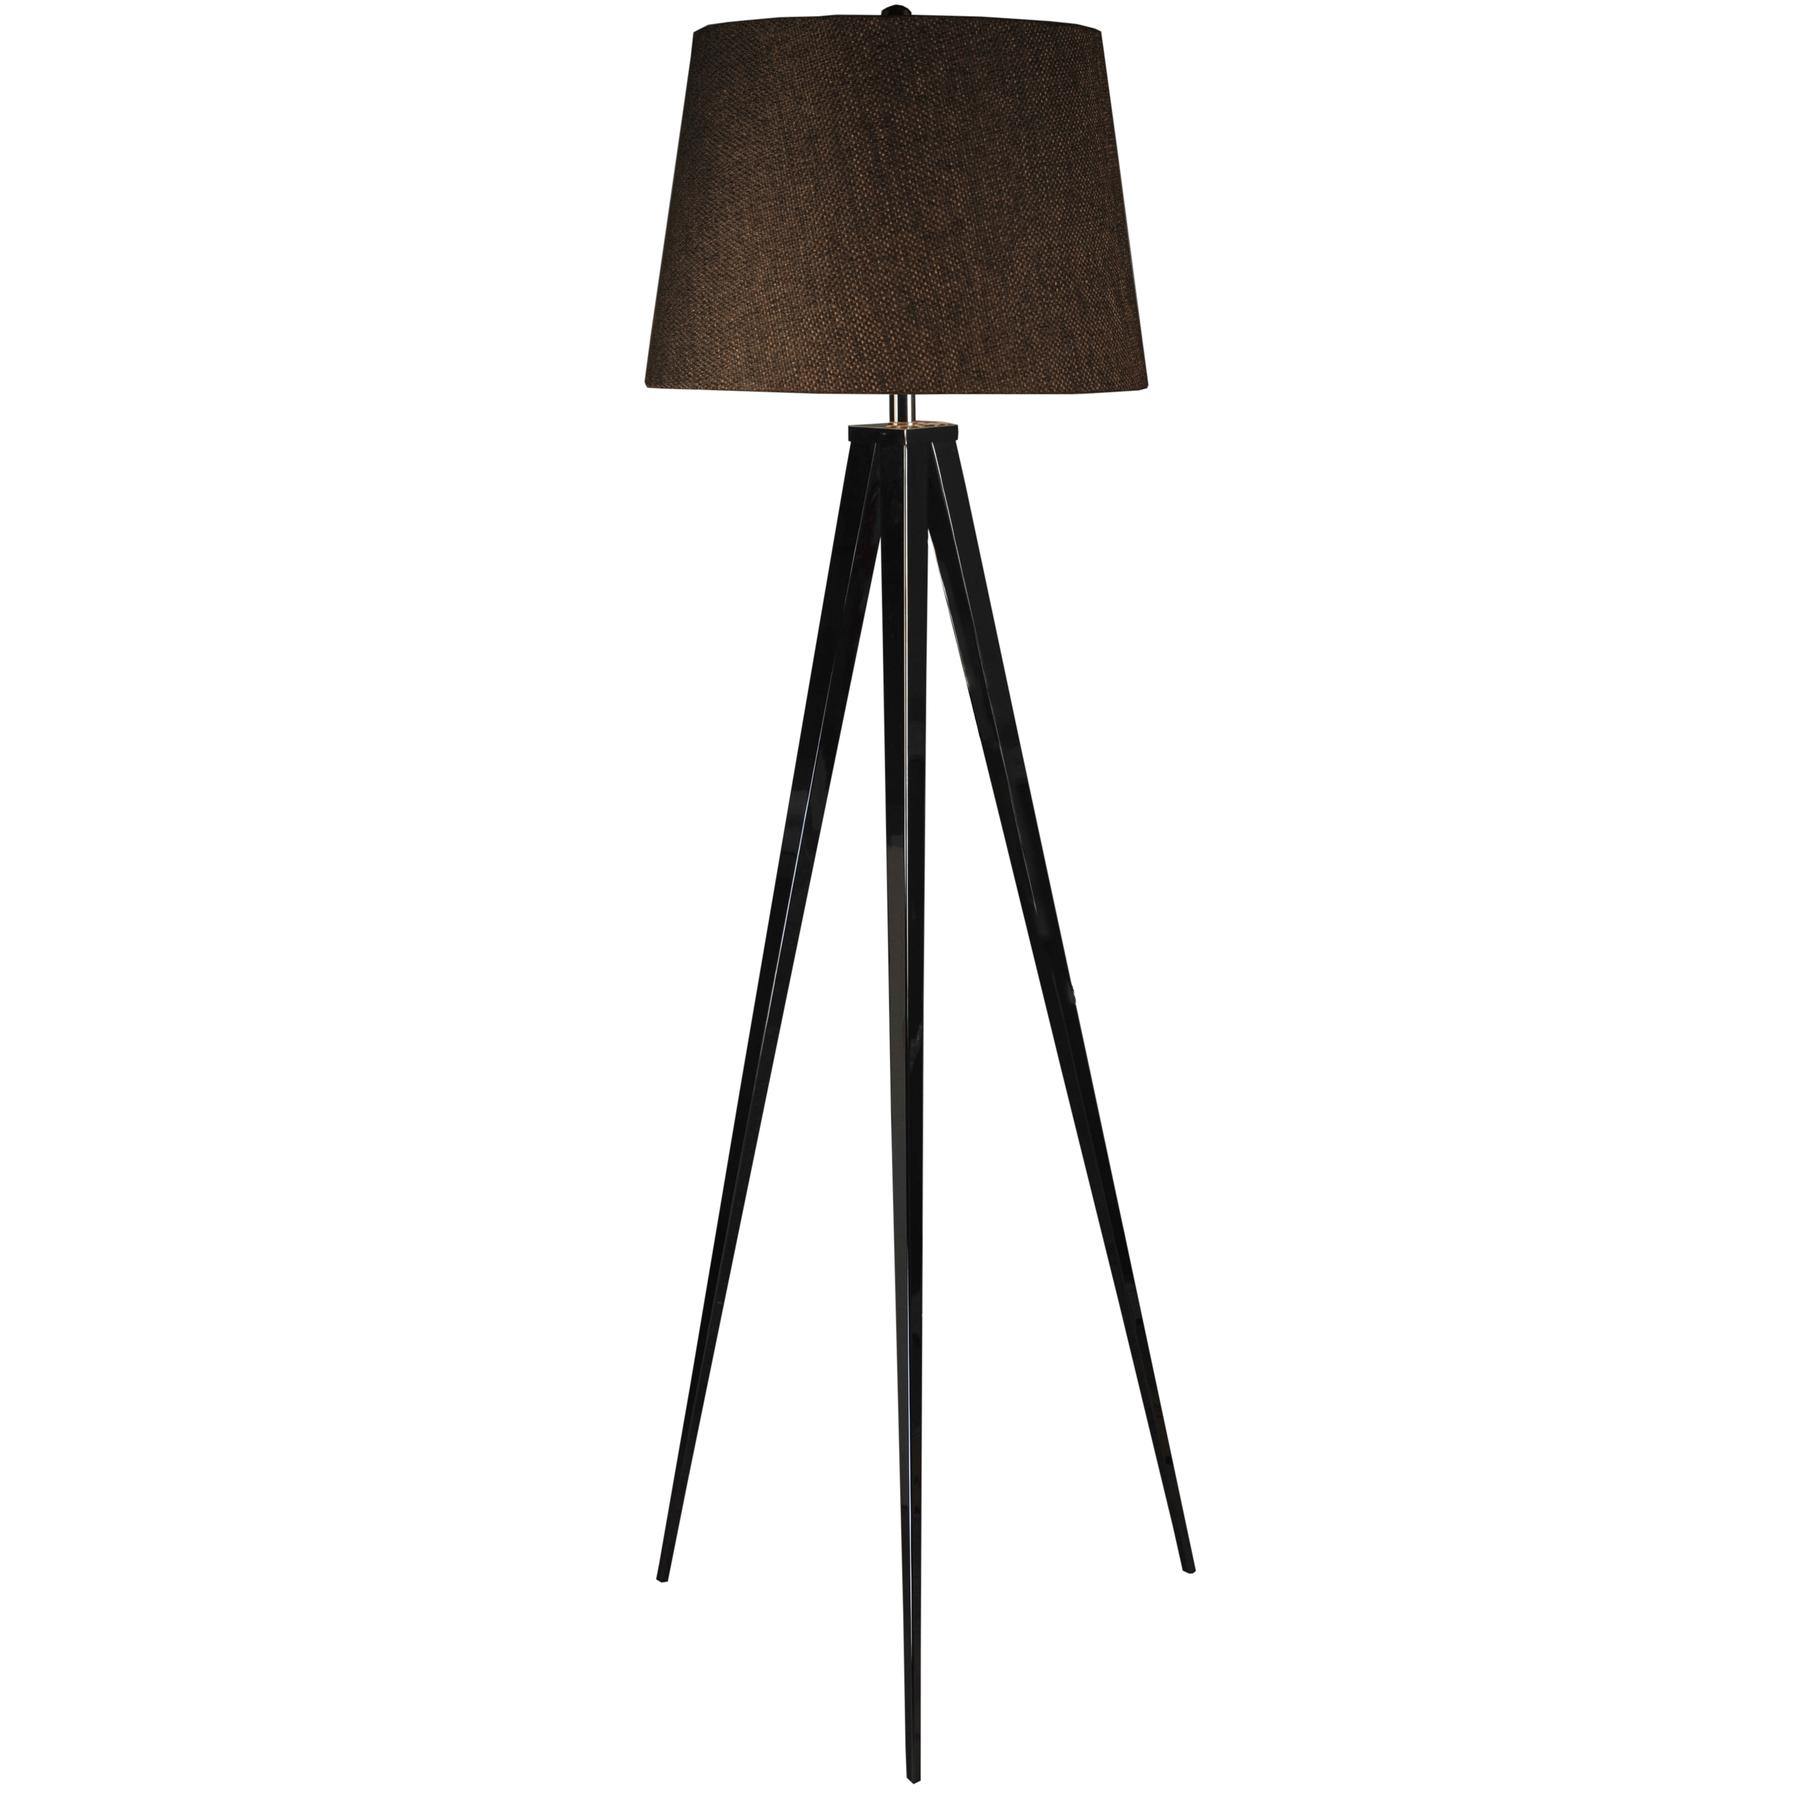 The Genoa Chrome Tripod Floor Lamp with regard to sizing 1800 X 1800